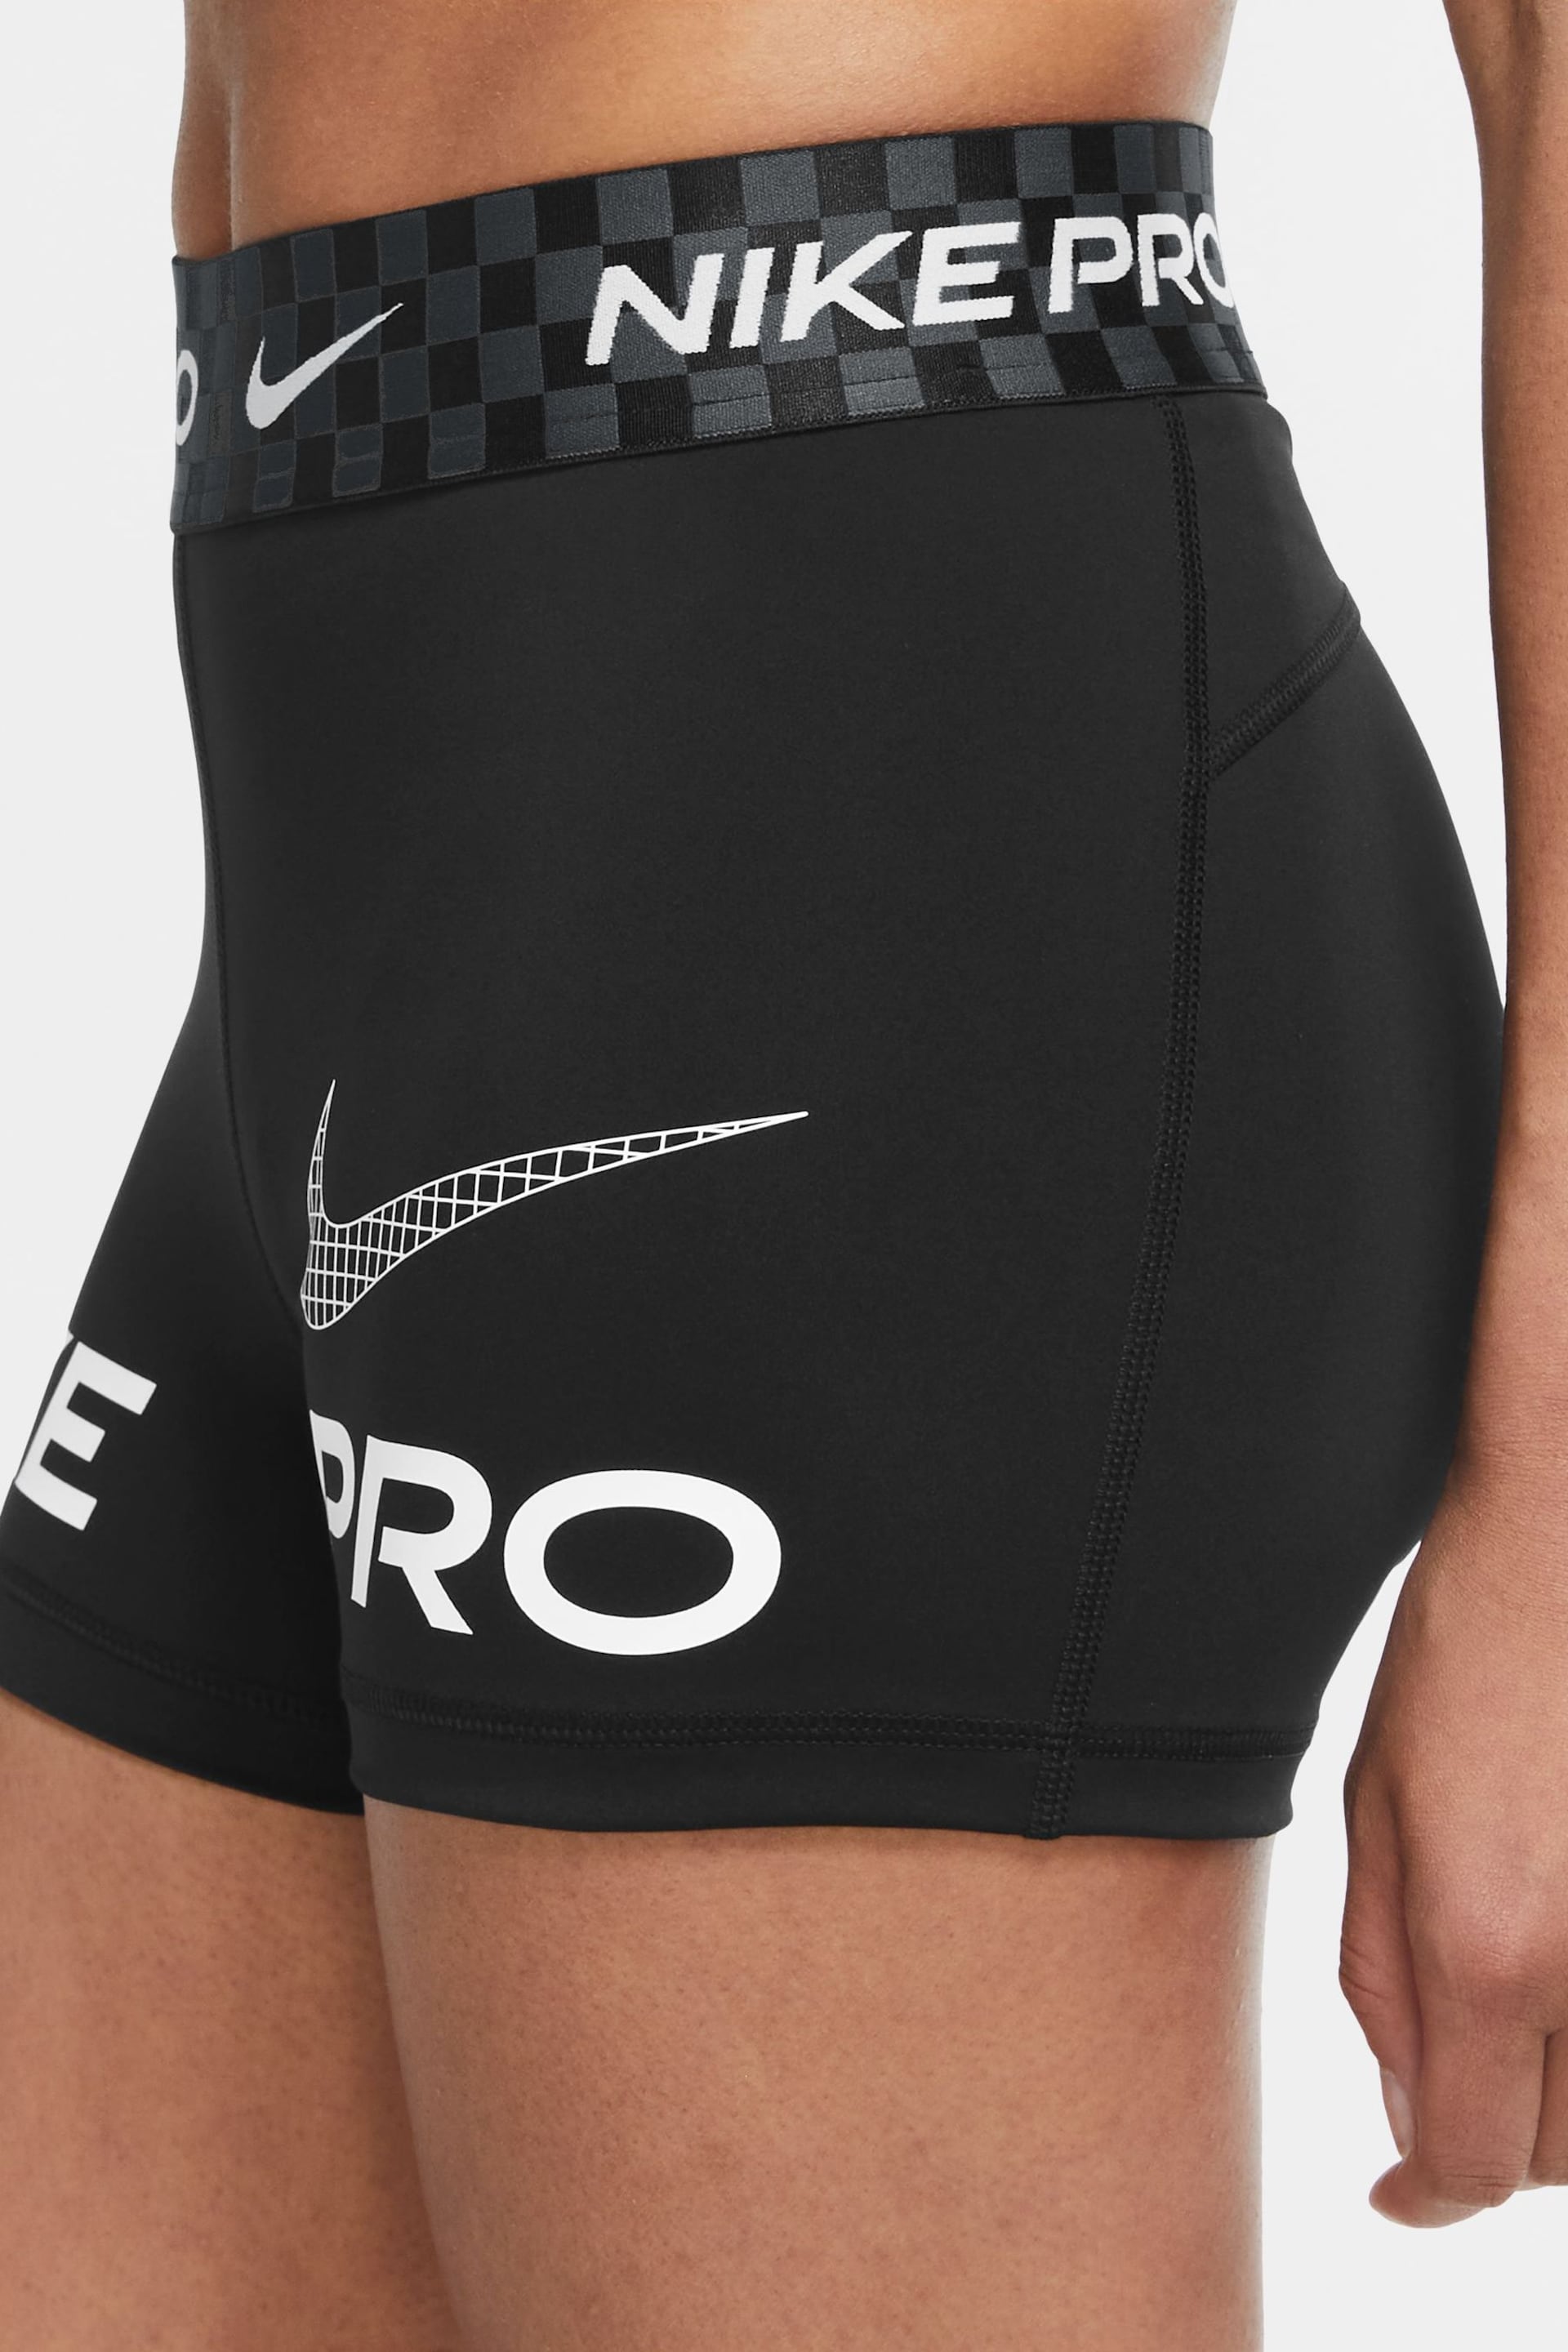 Nike Black Pro Dri-FIT 3-Inch Shorts - Image 3 of 4